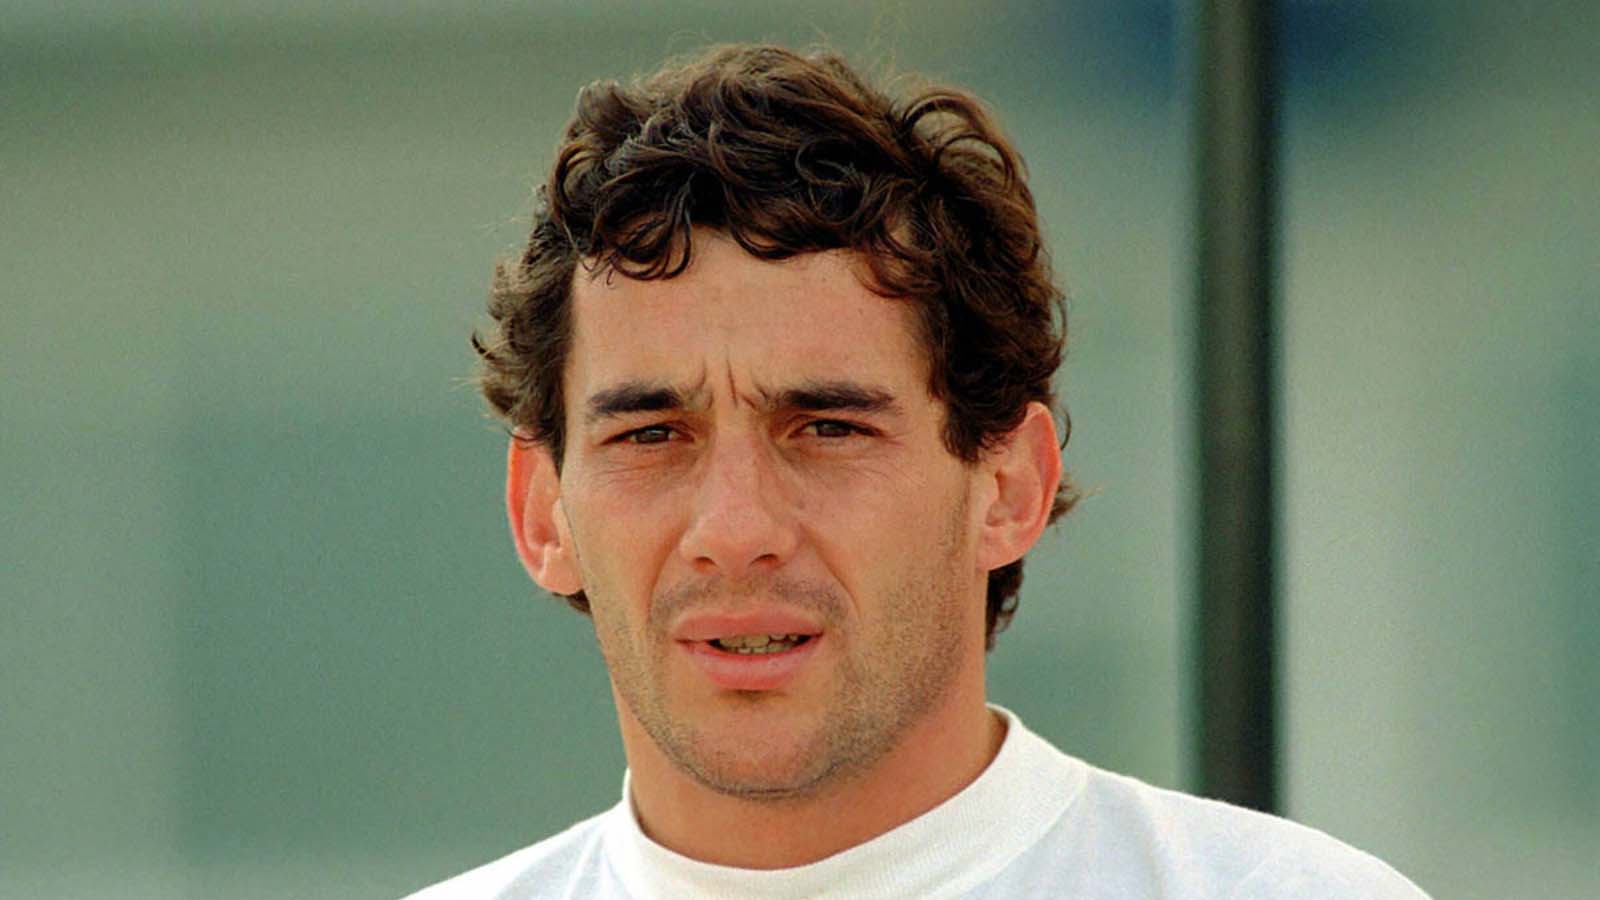 McLaren driver Ayrton Senna, pictured in 1992.